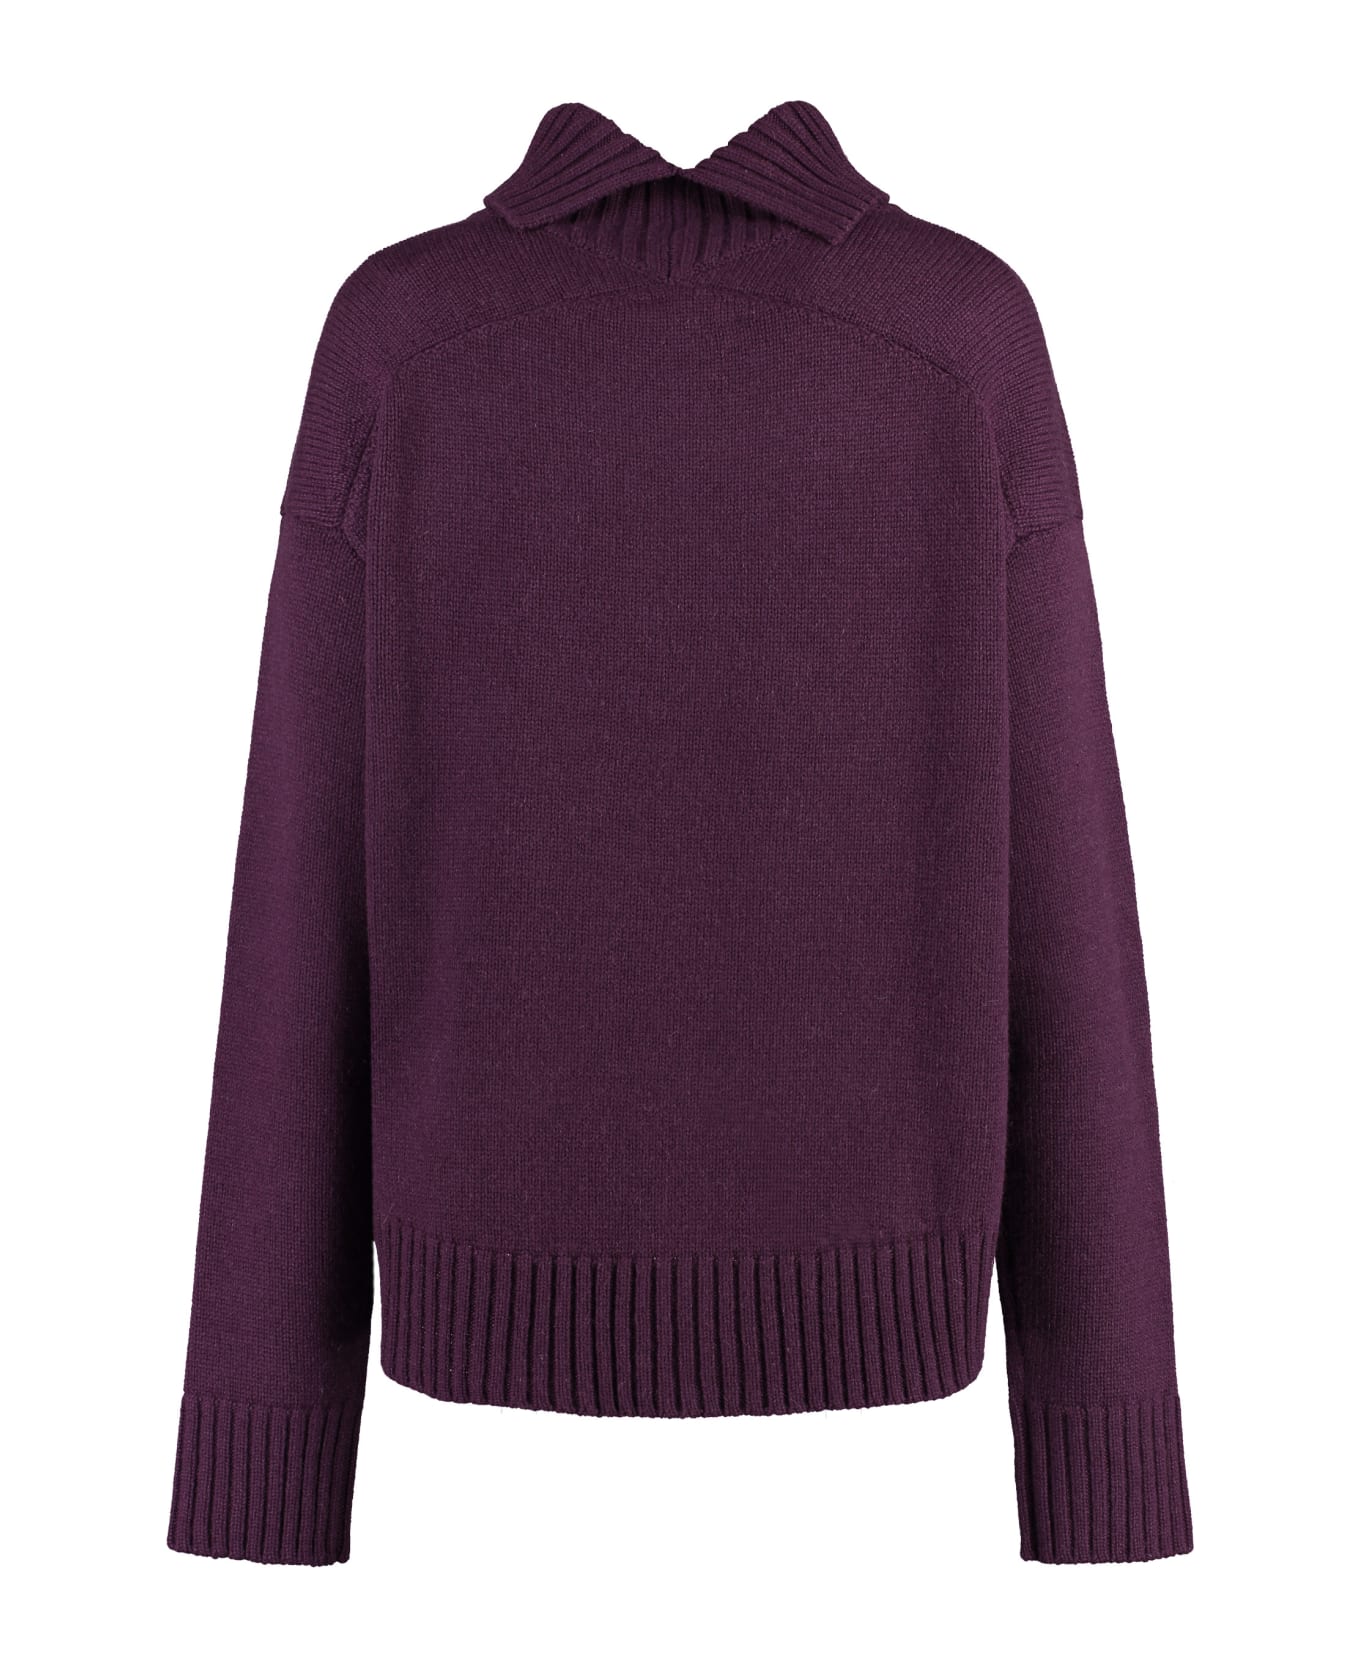 Jil Sander Cashmere Sweater - purple ニットウェア